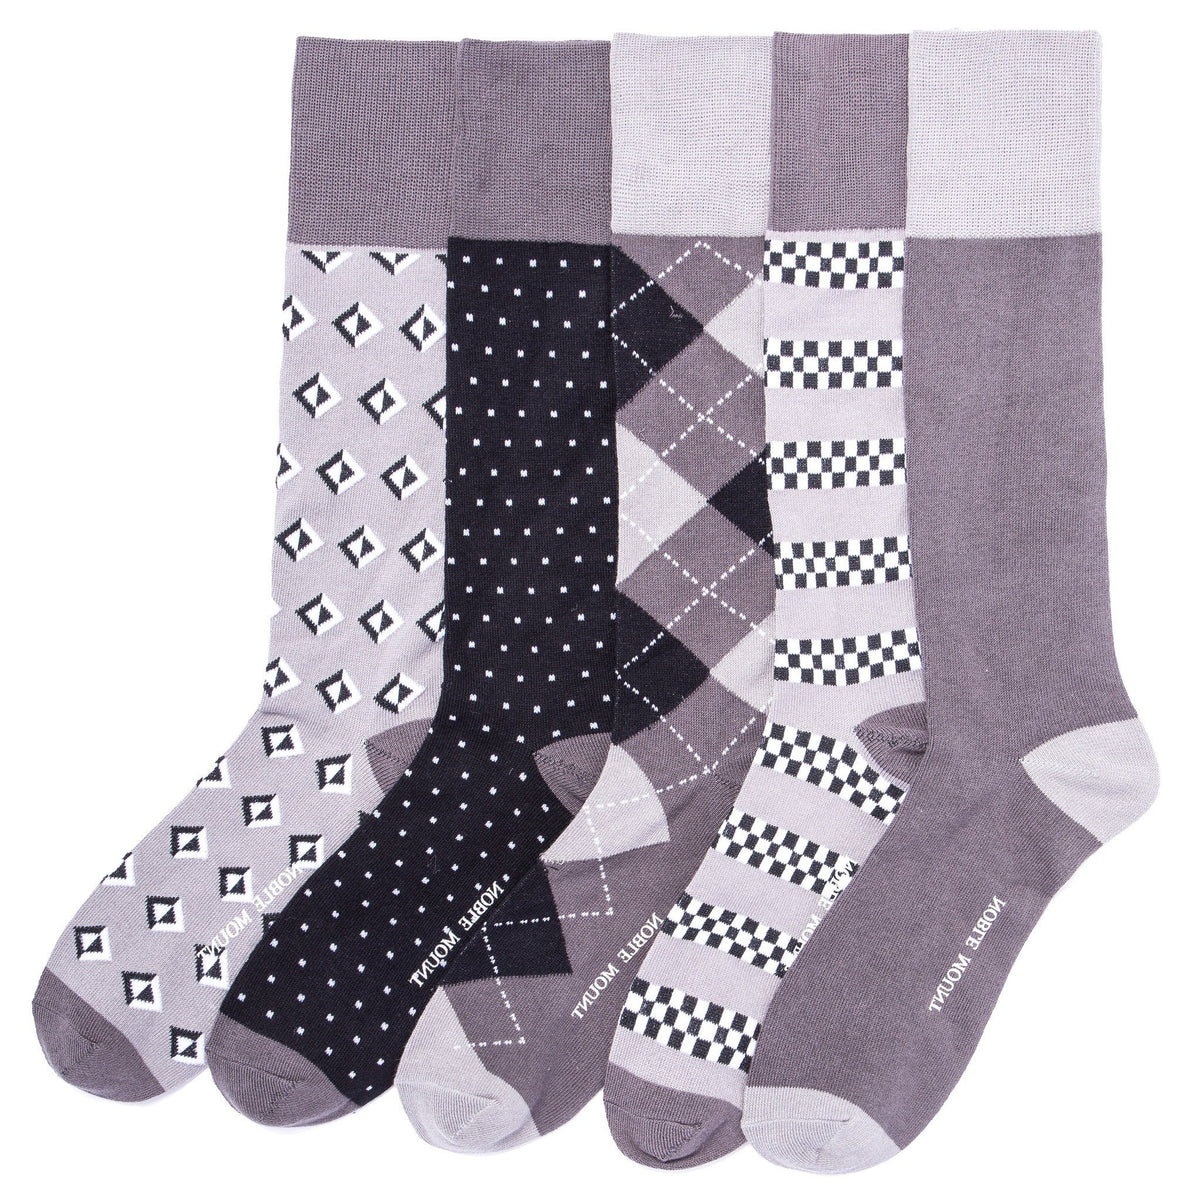 Men's Combed Cotton Weekday Dress Socks 5-Pack - Set A5